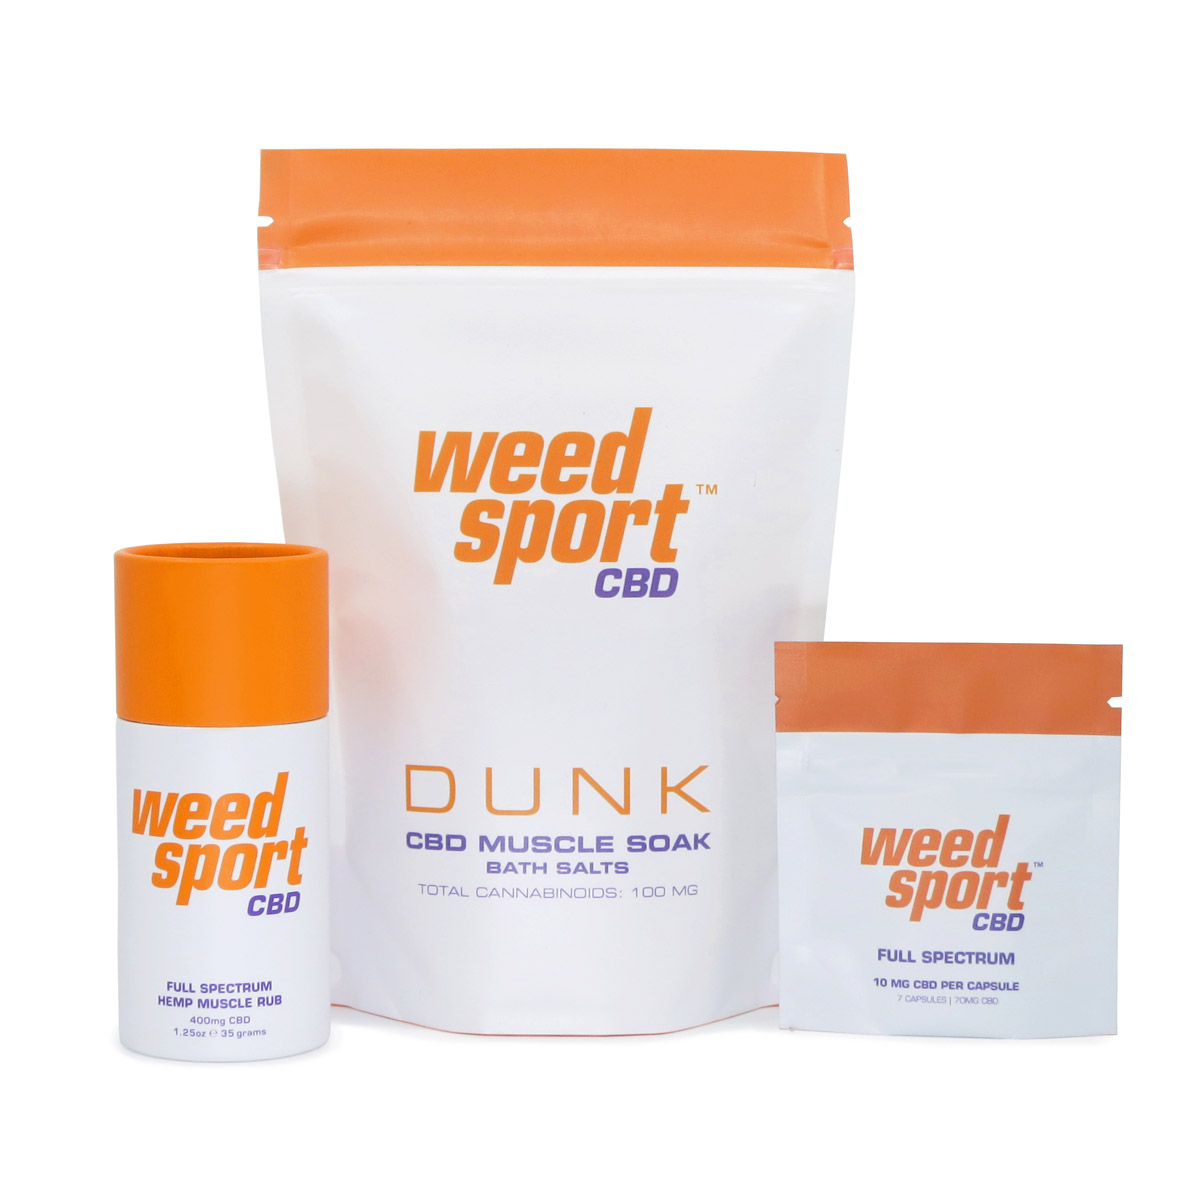 WeedSport CBD Relax and Recover Bundle